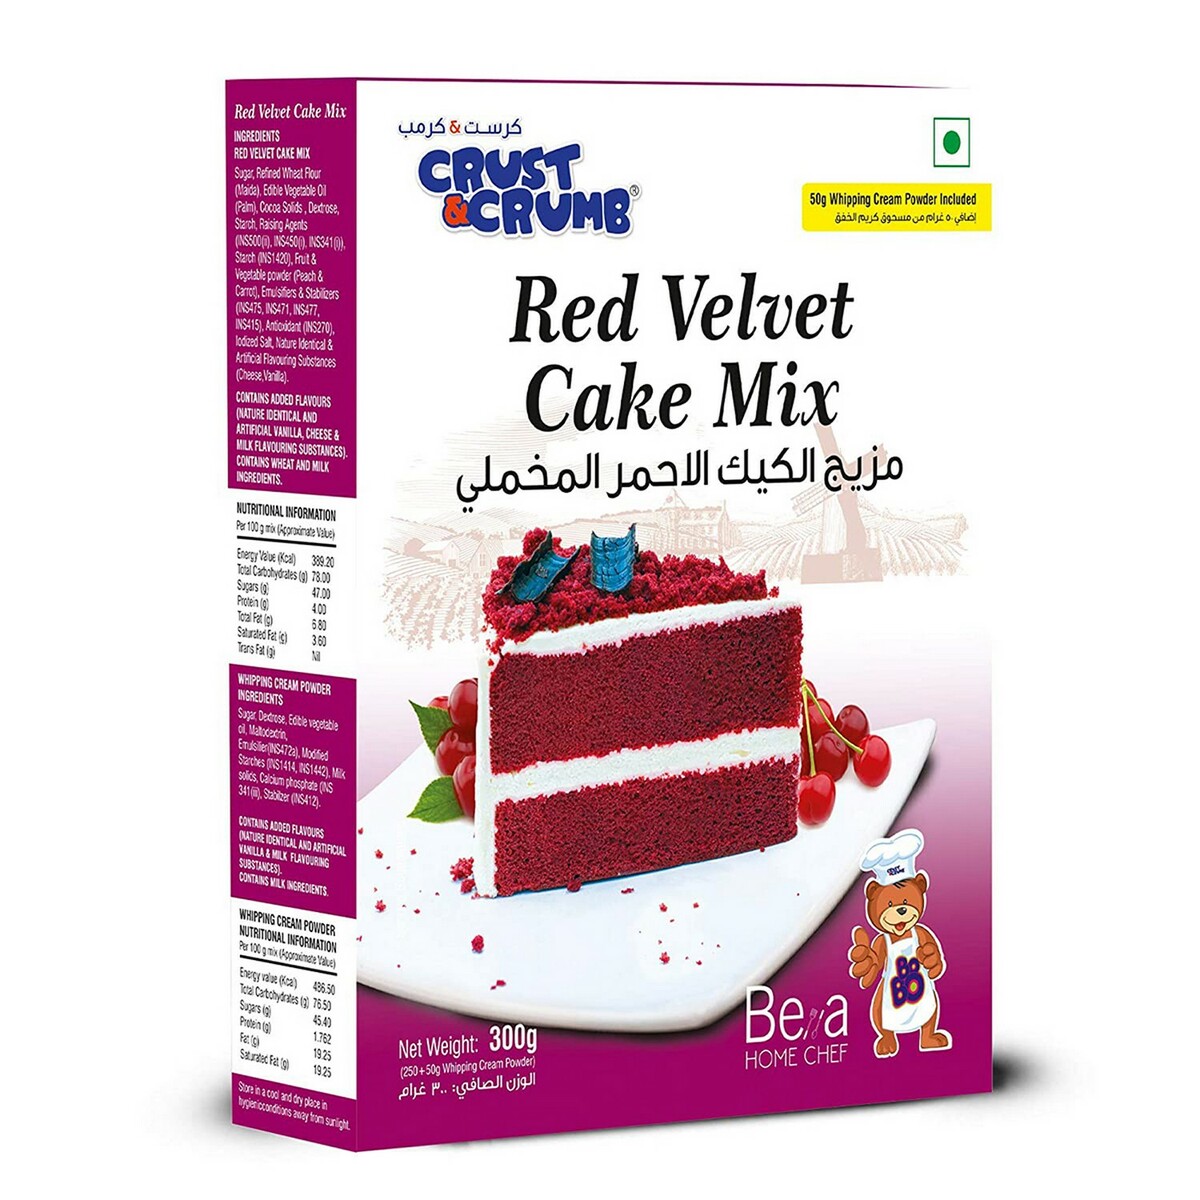 Crust N Crumb Red Velvet Cake Mix 275g